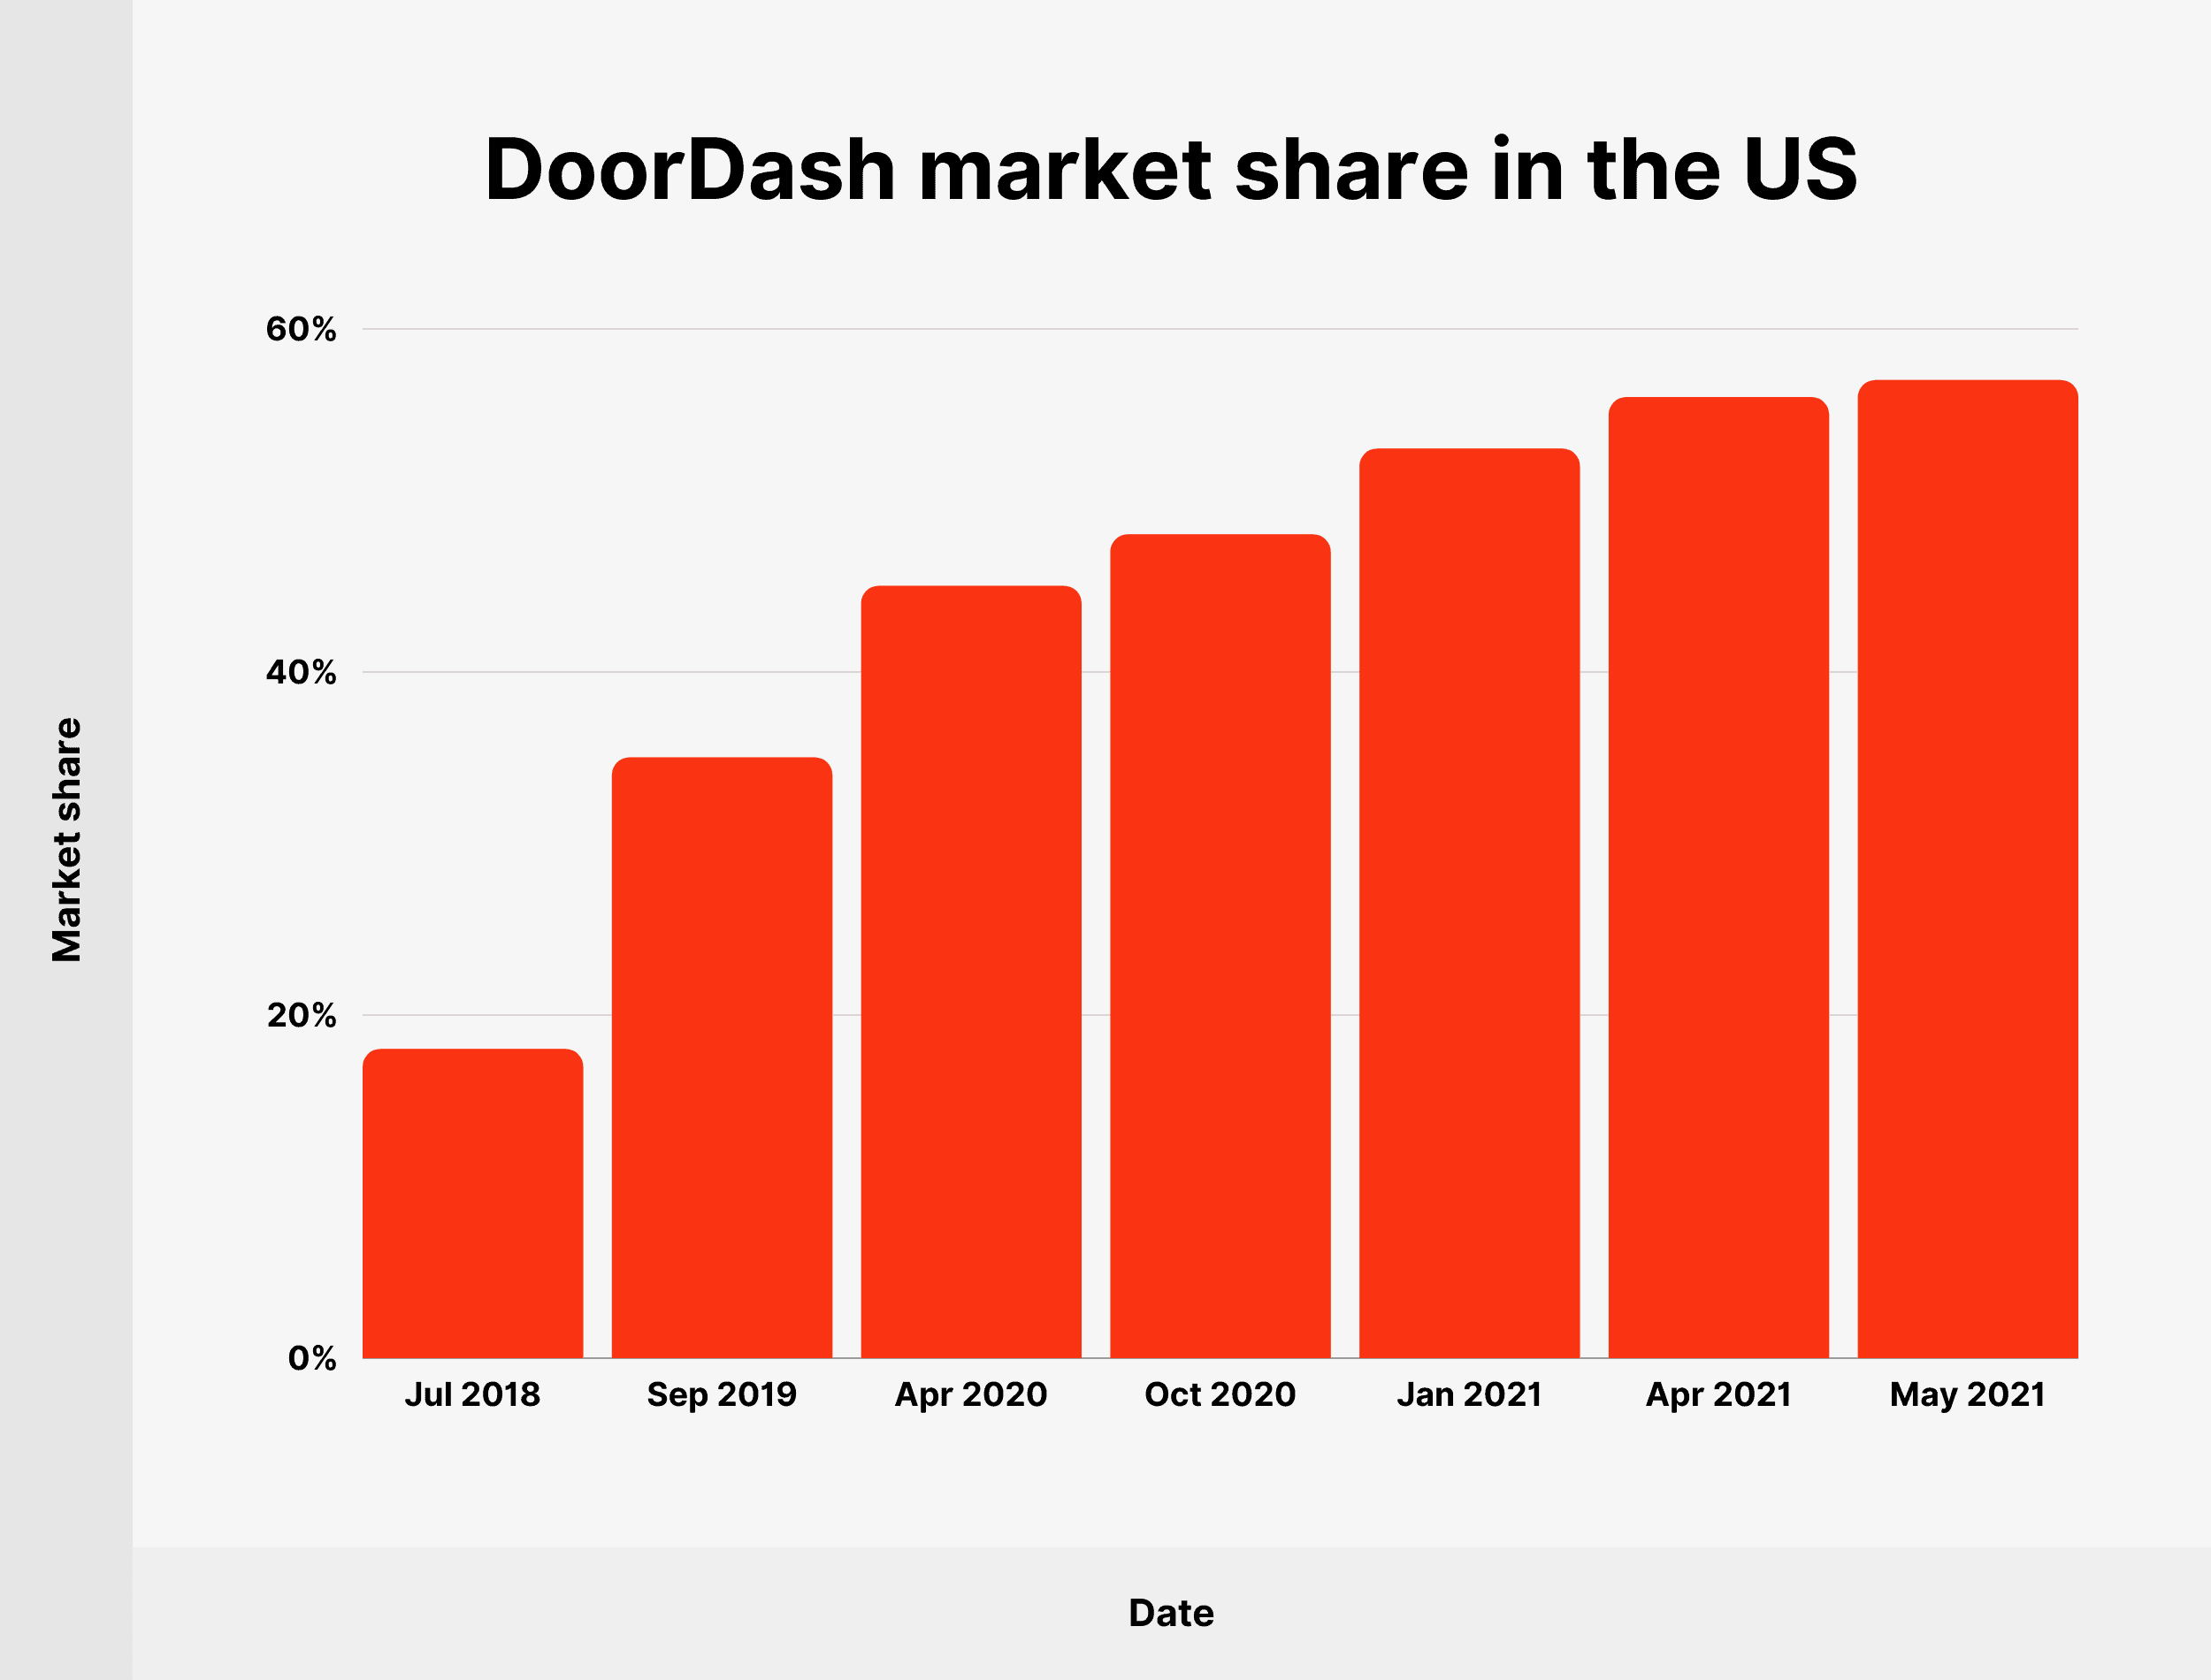 DoorDash market share in the US